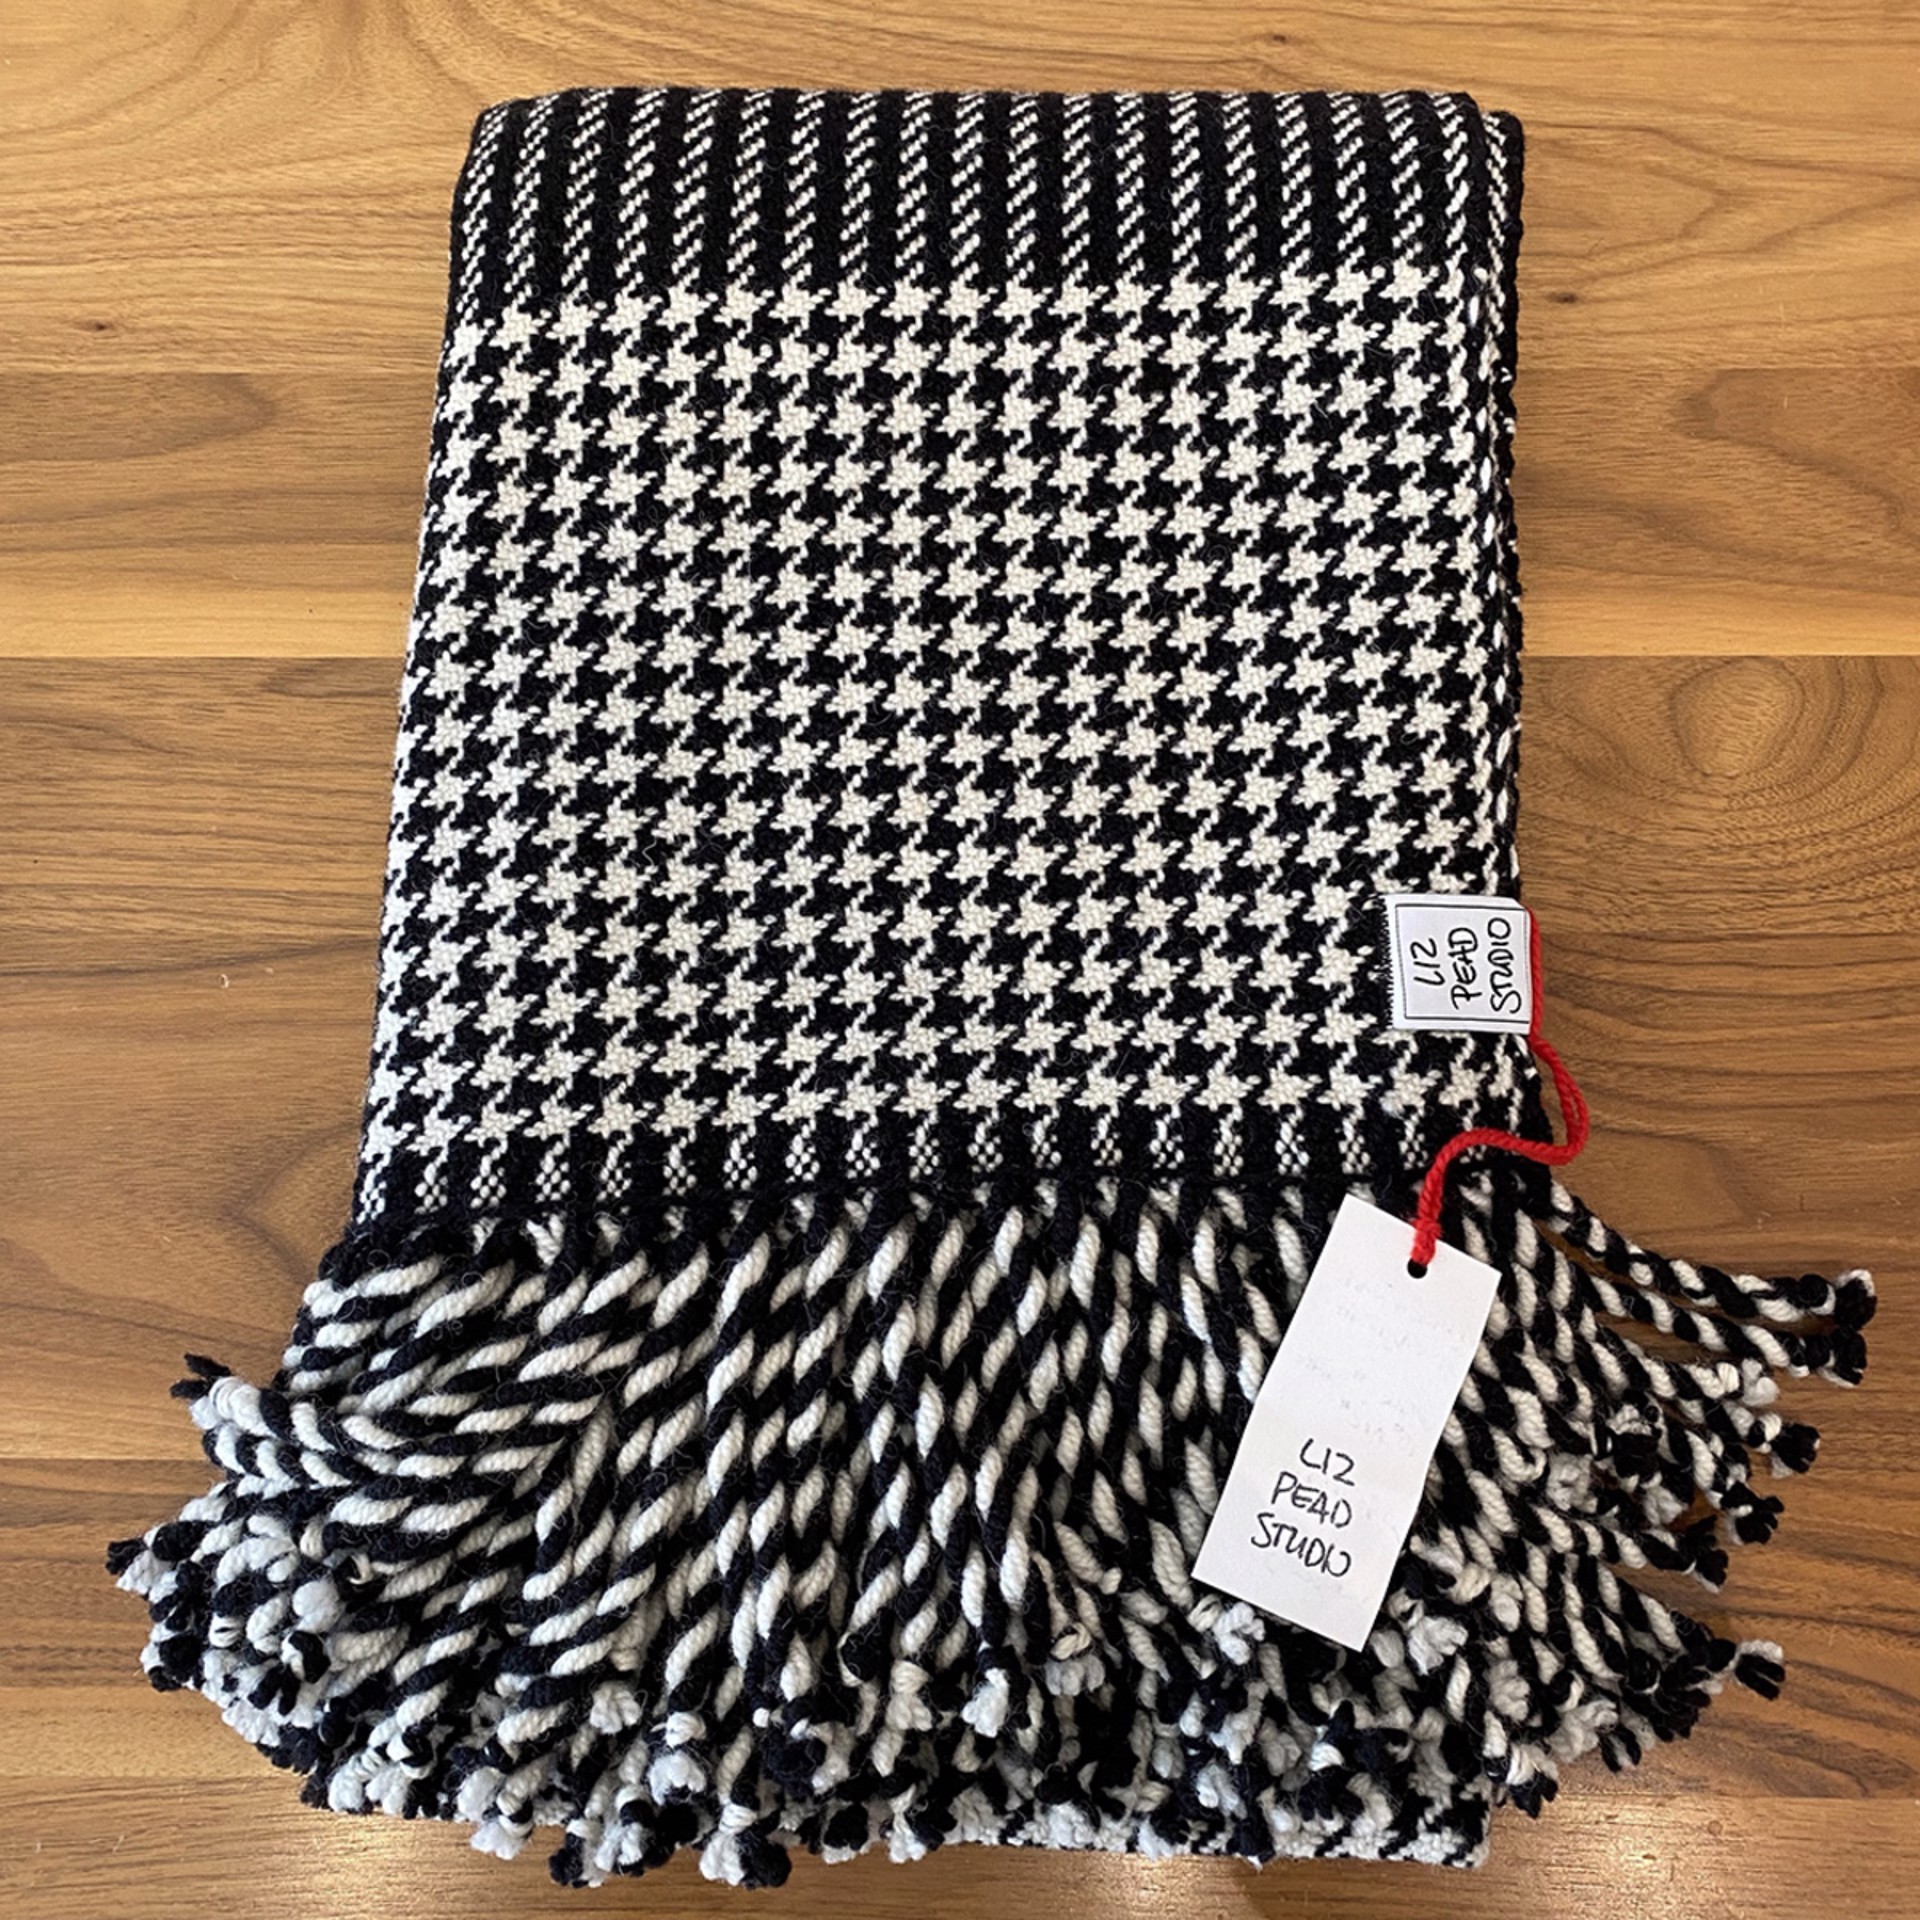 Houndstooth Twill Single Blanket, 5" Stripe by Liz Pead